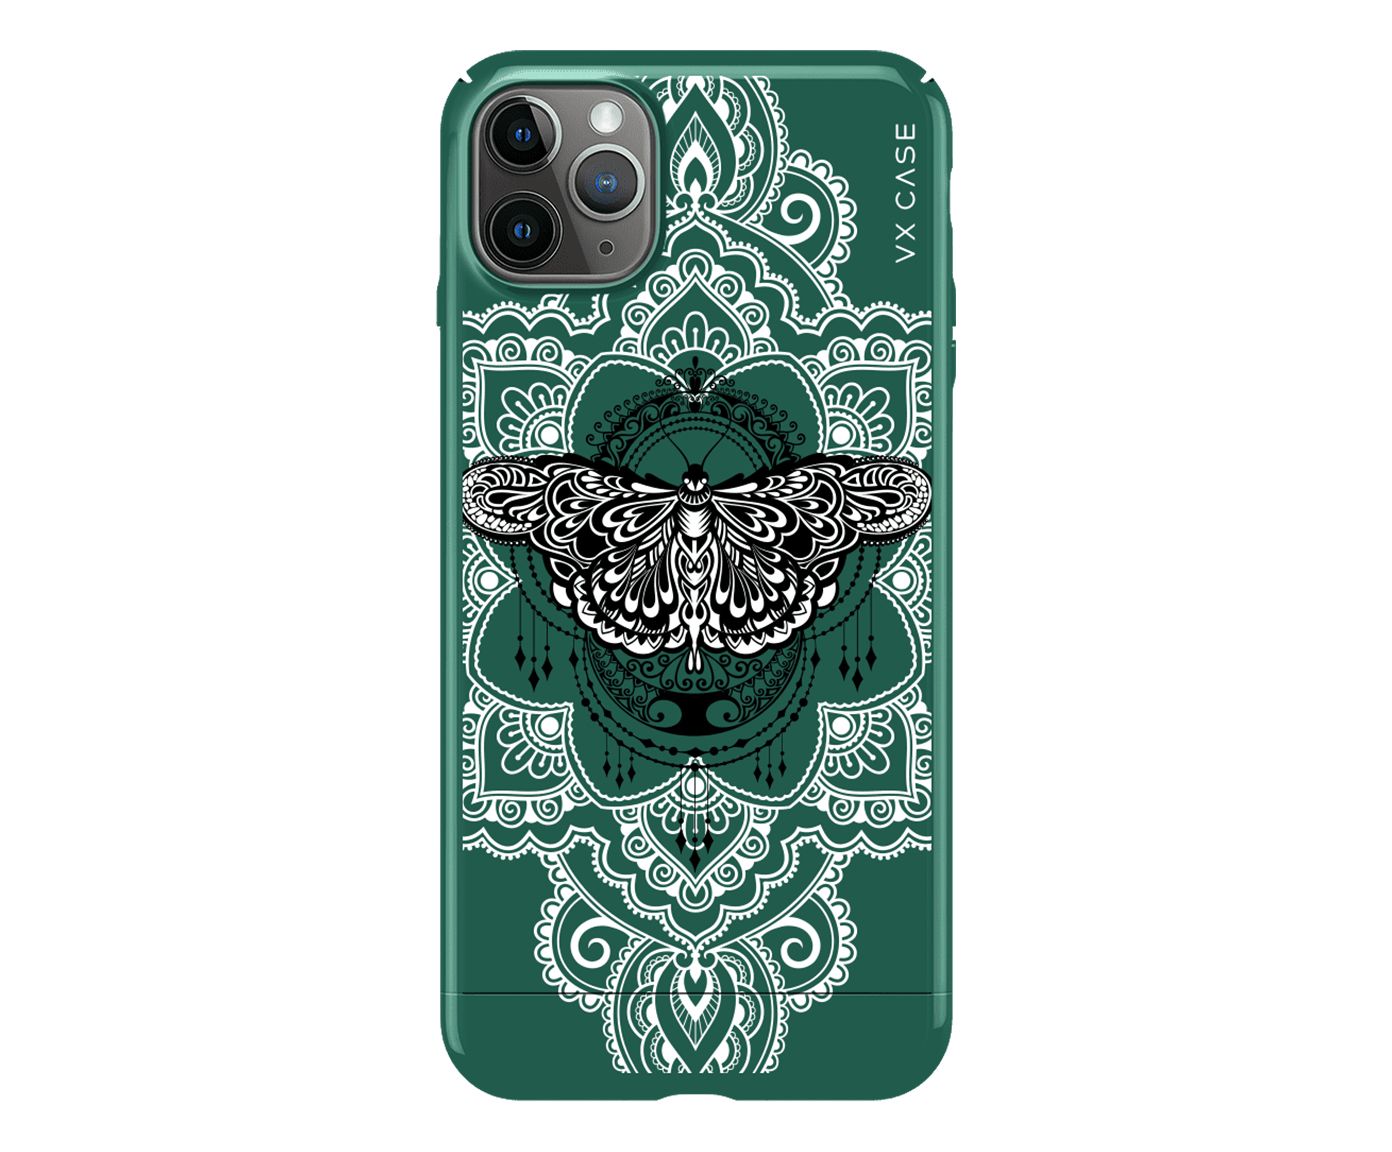 Capa Envernizada Vx Case Iphone 11 Pro Mystic Butterfly | Westwing.com.br